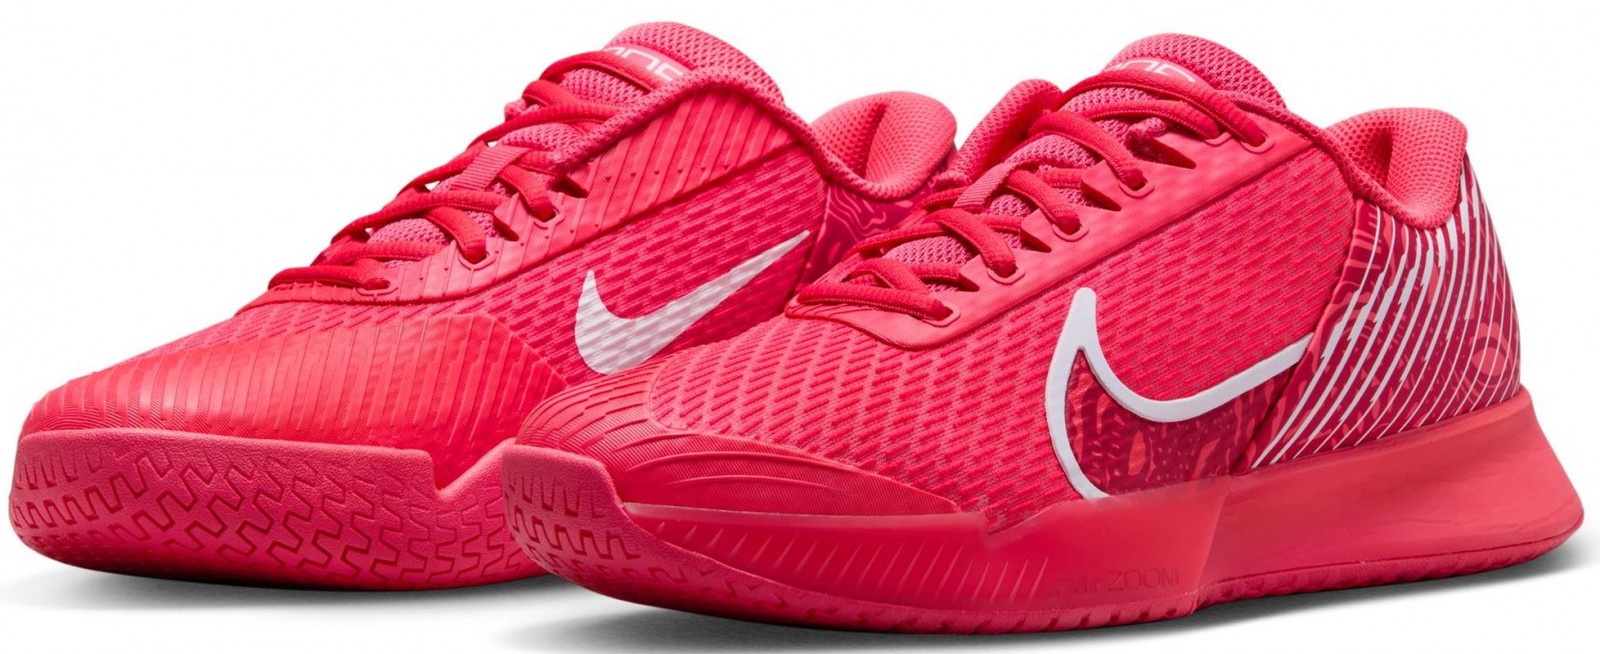 Теннисные кроссовки мужские Nike Zoom Vapor Pro 2 ember glow/noble red/white